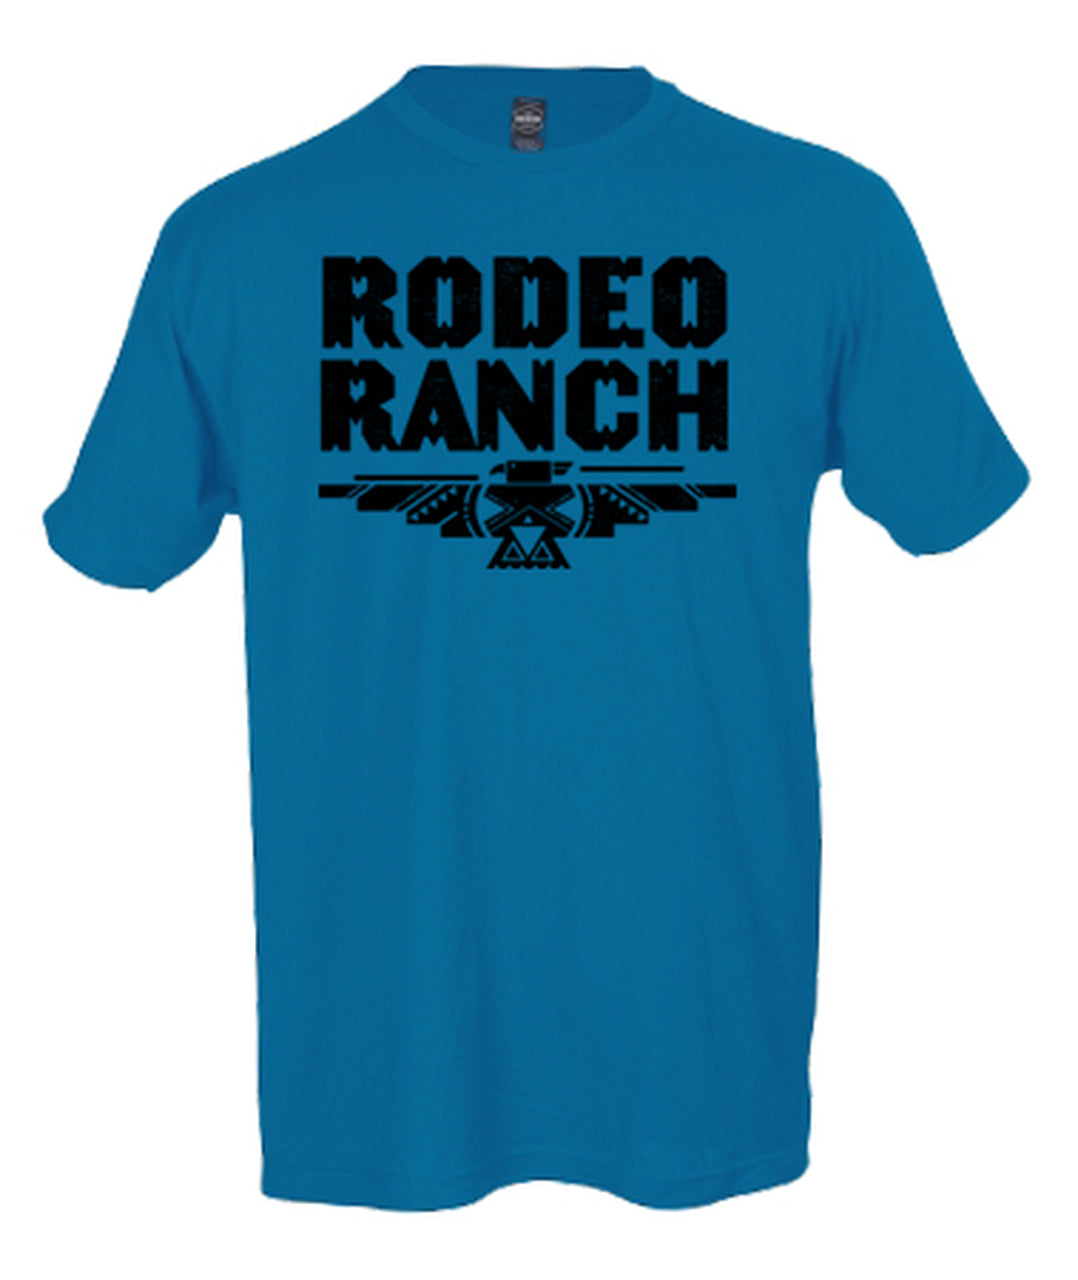 Rodeo Ranch Thunderbird Short Sleeve Shirt - Turquoise